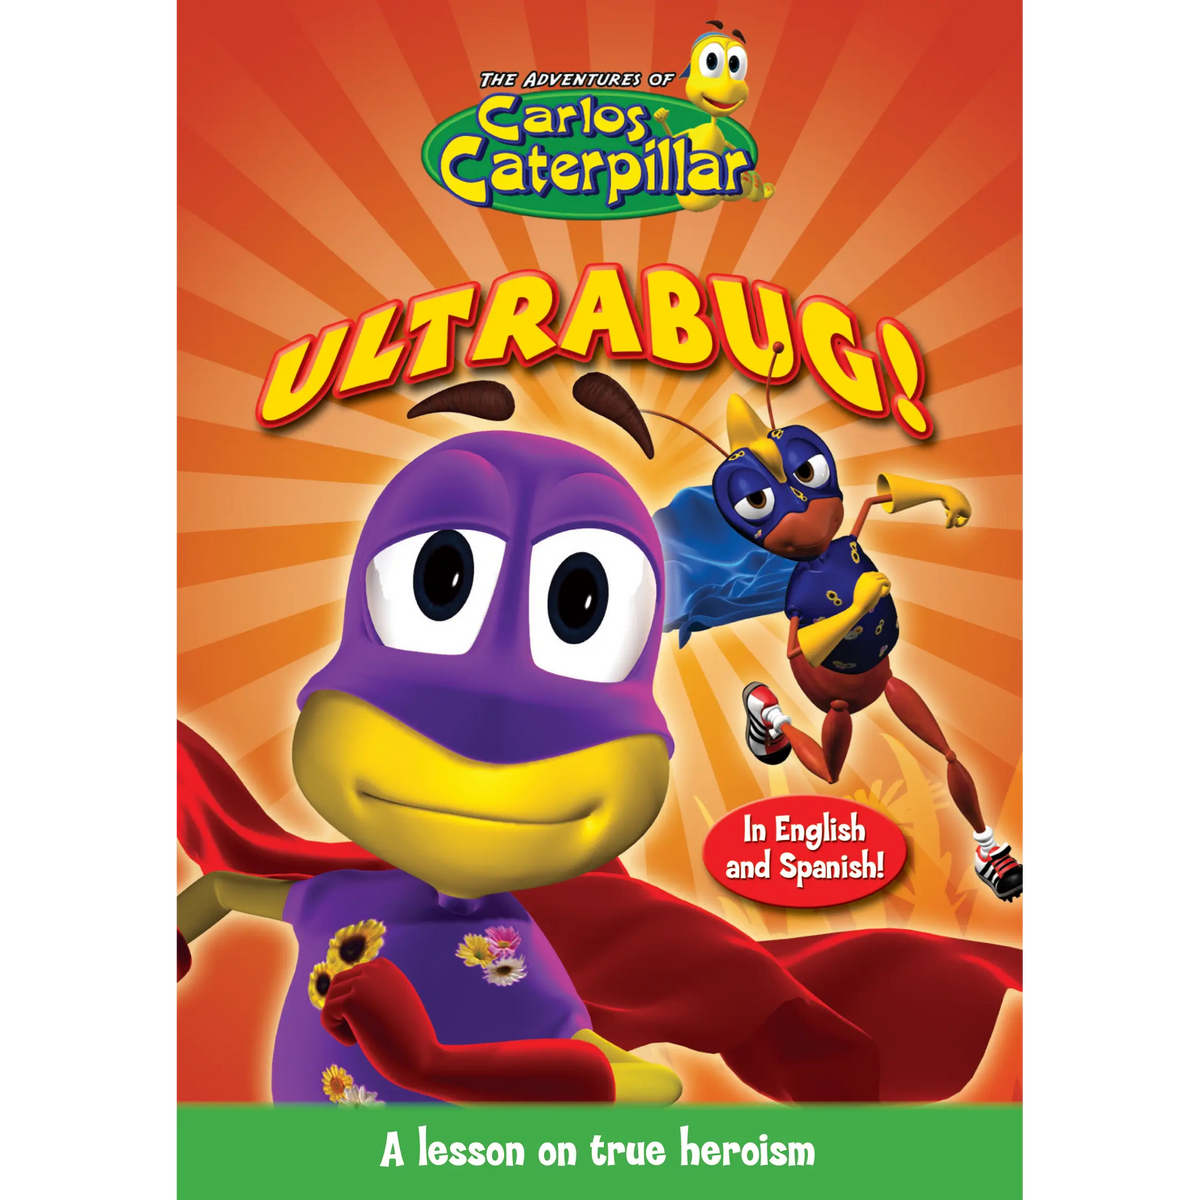 Carlos Caterpillar Episode 06: Ultrabug - Video Download